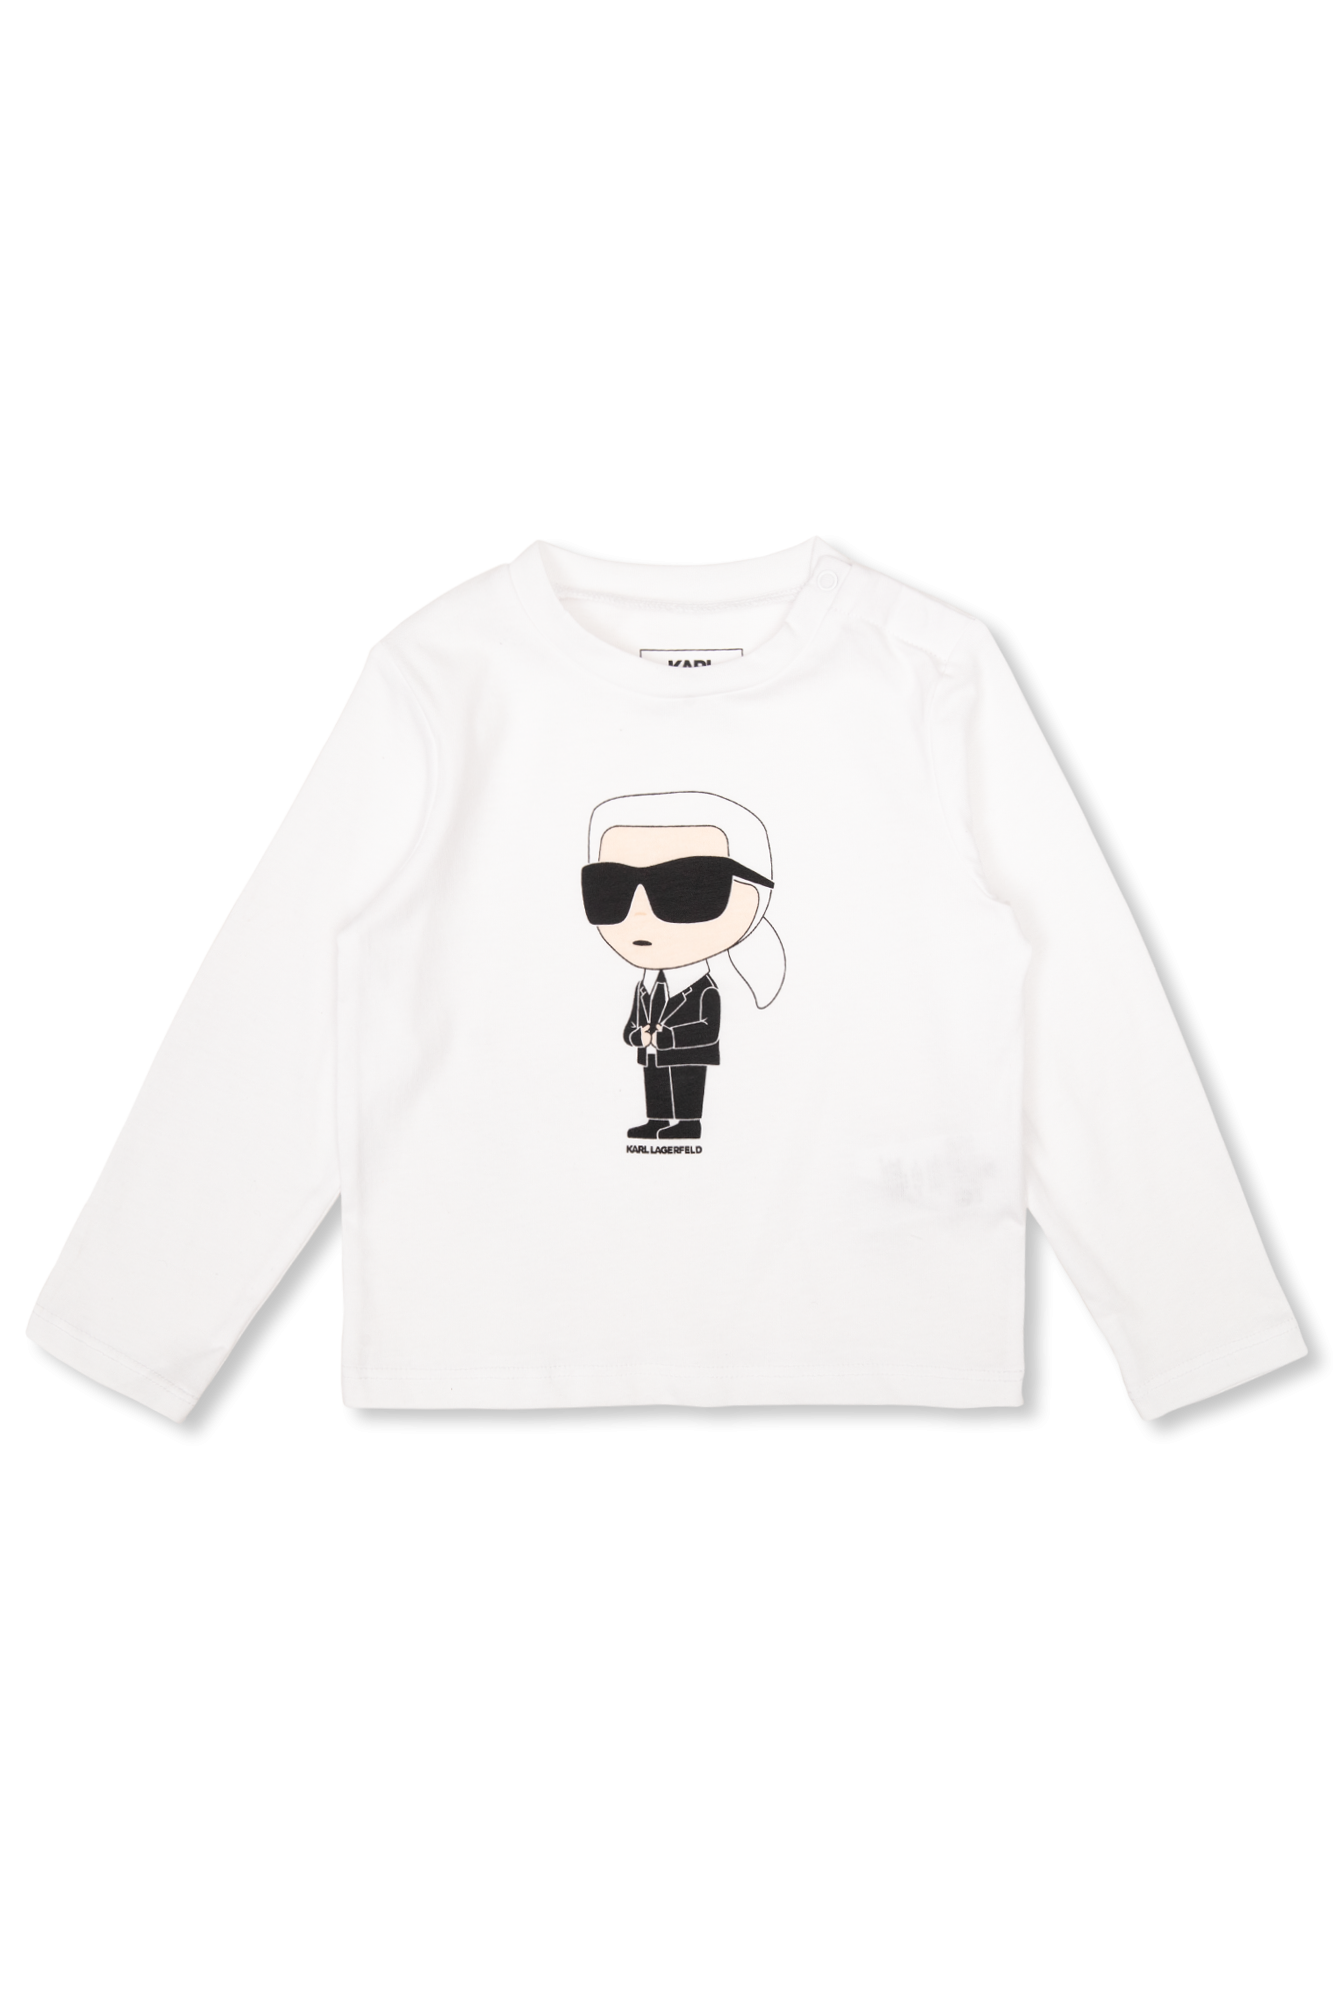 Black T-shirt with logo Karl Lagerfeld Kids - Vitkac HK